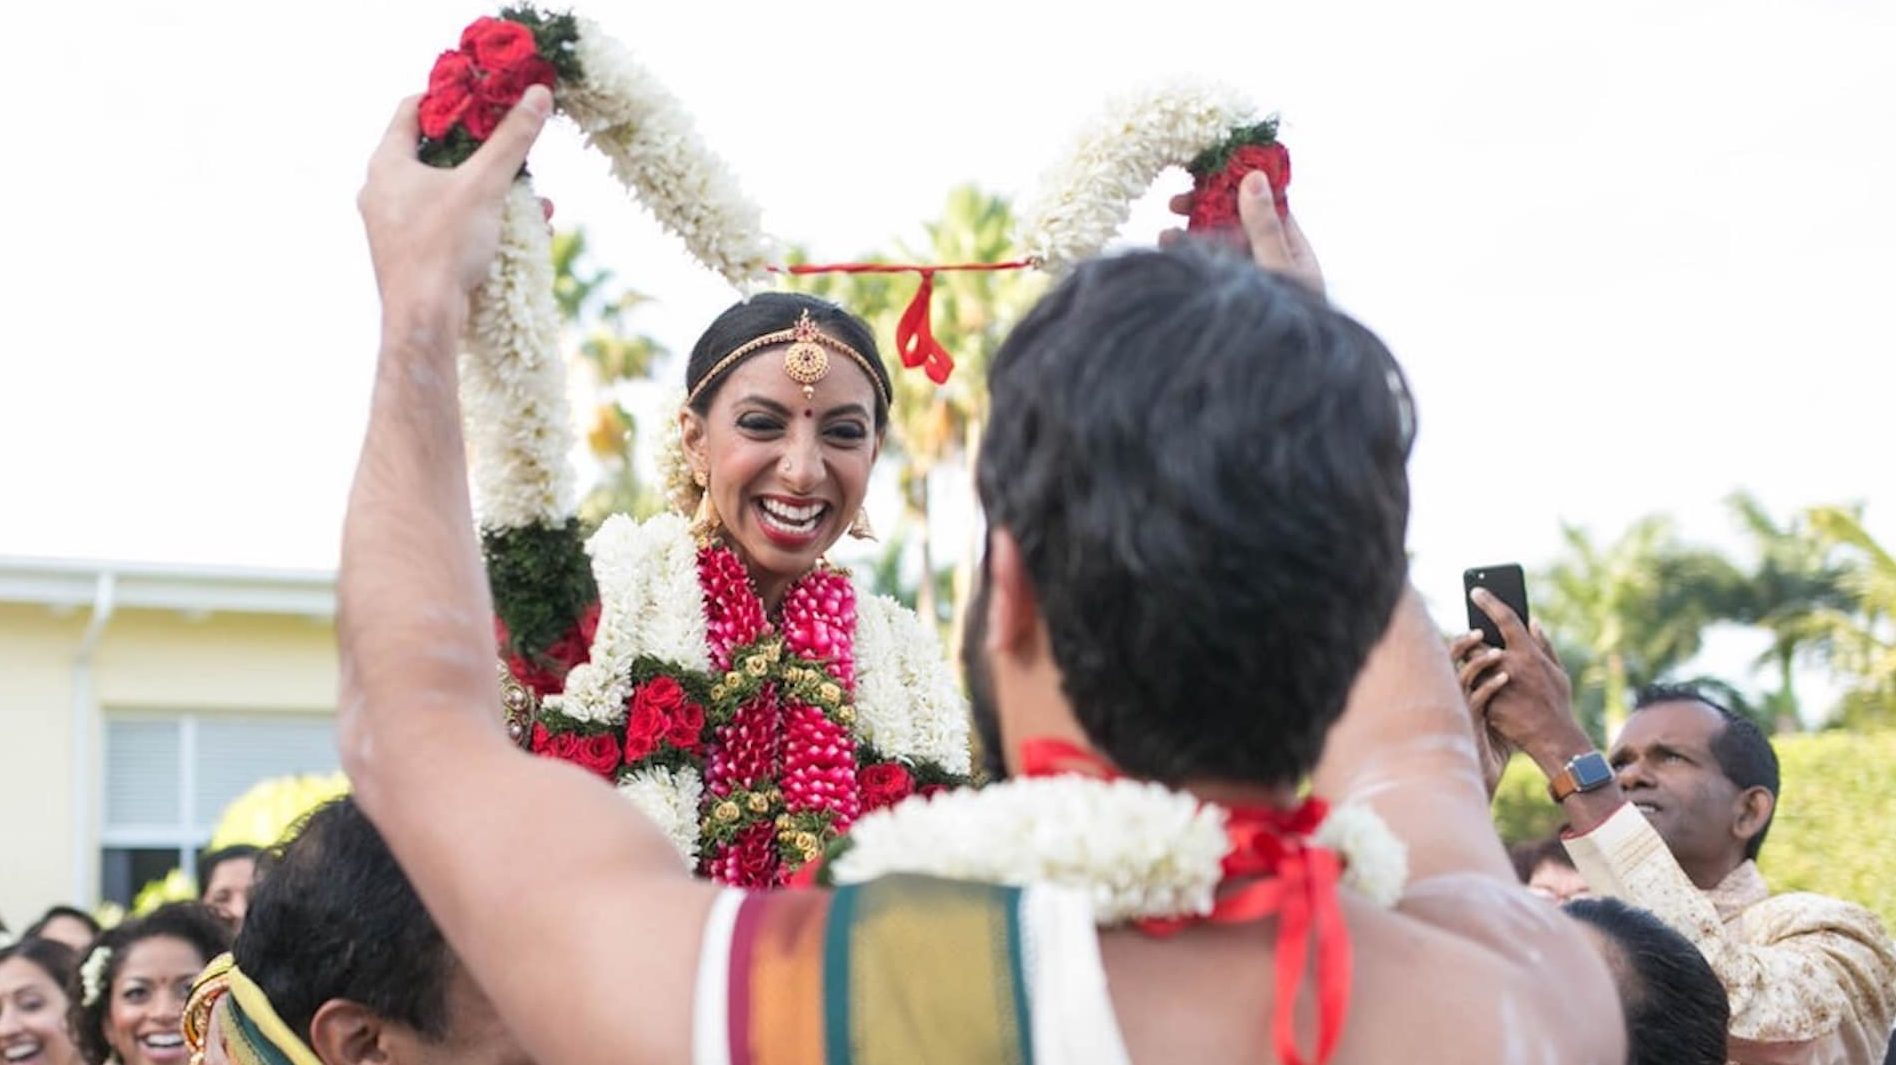 The Tamil bride. Nithya Krishnan on her wedding day.